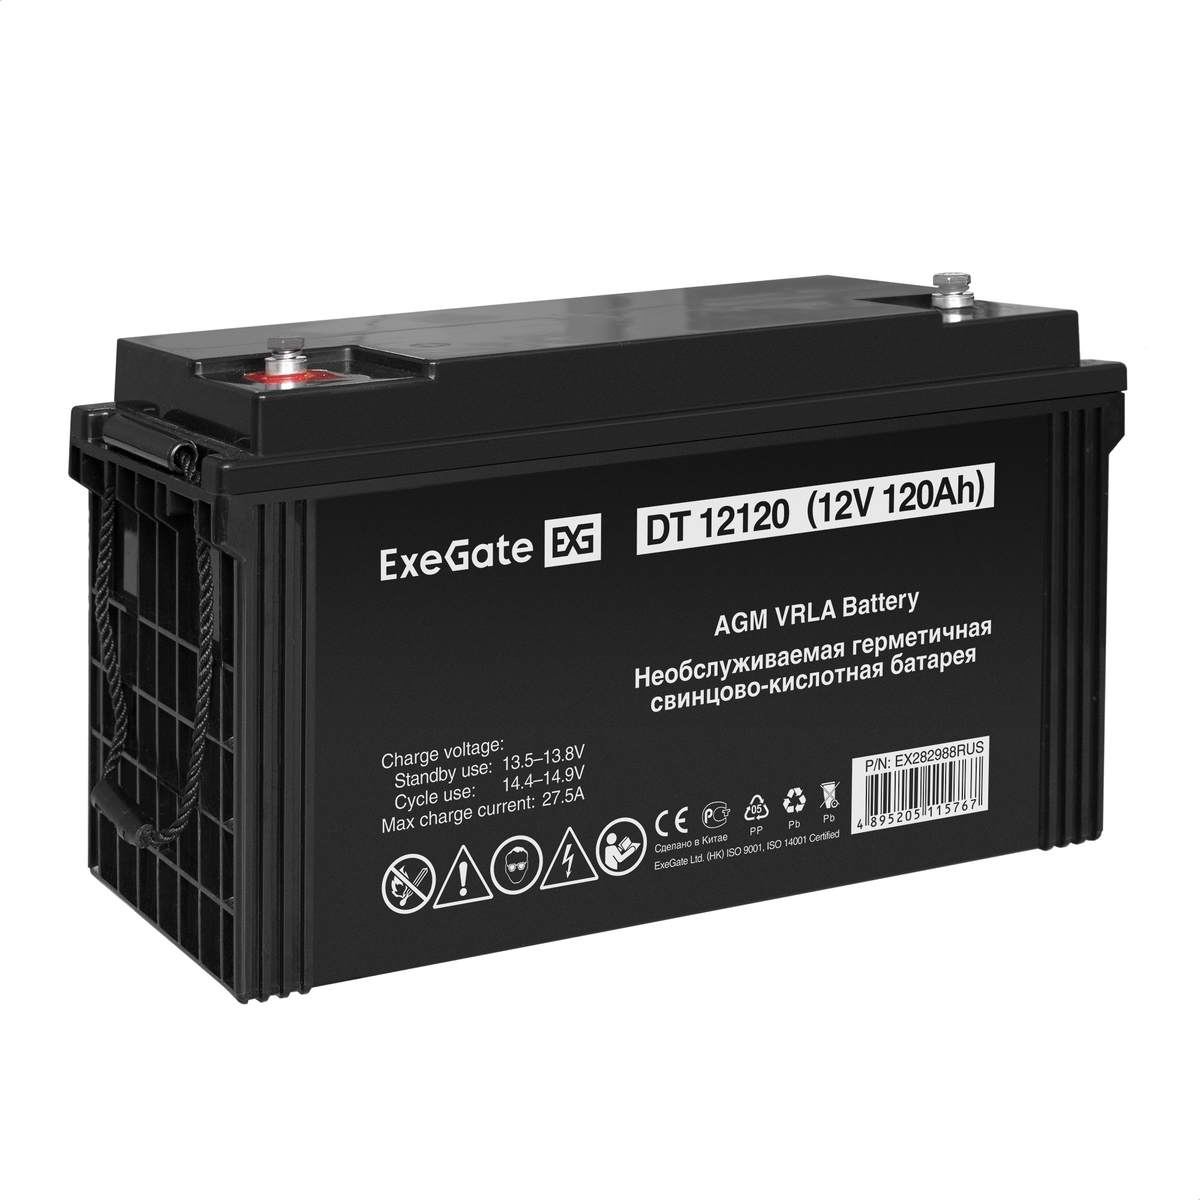 UPS set EX295998 + battery 120Ah EX282988 2 piece